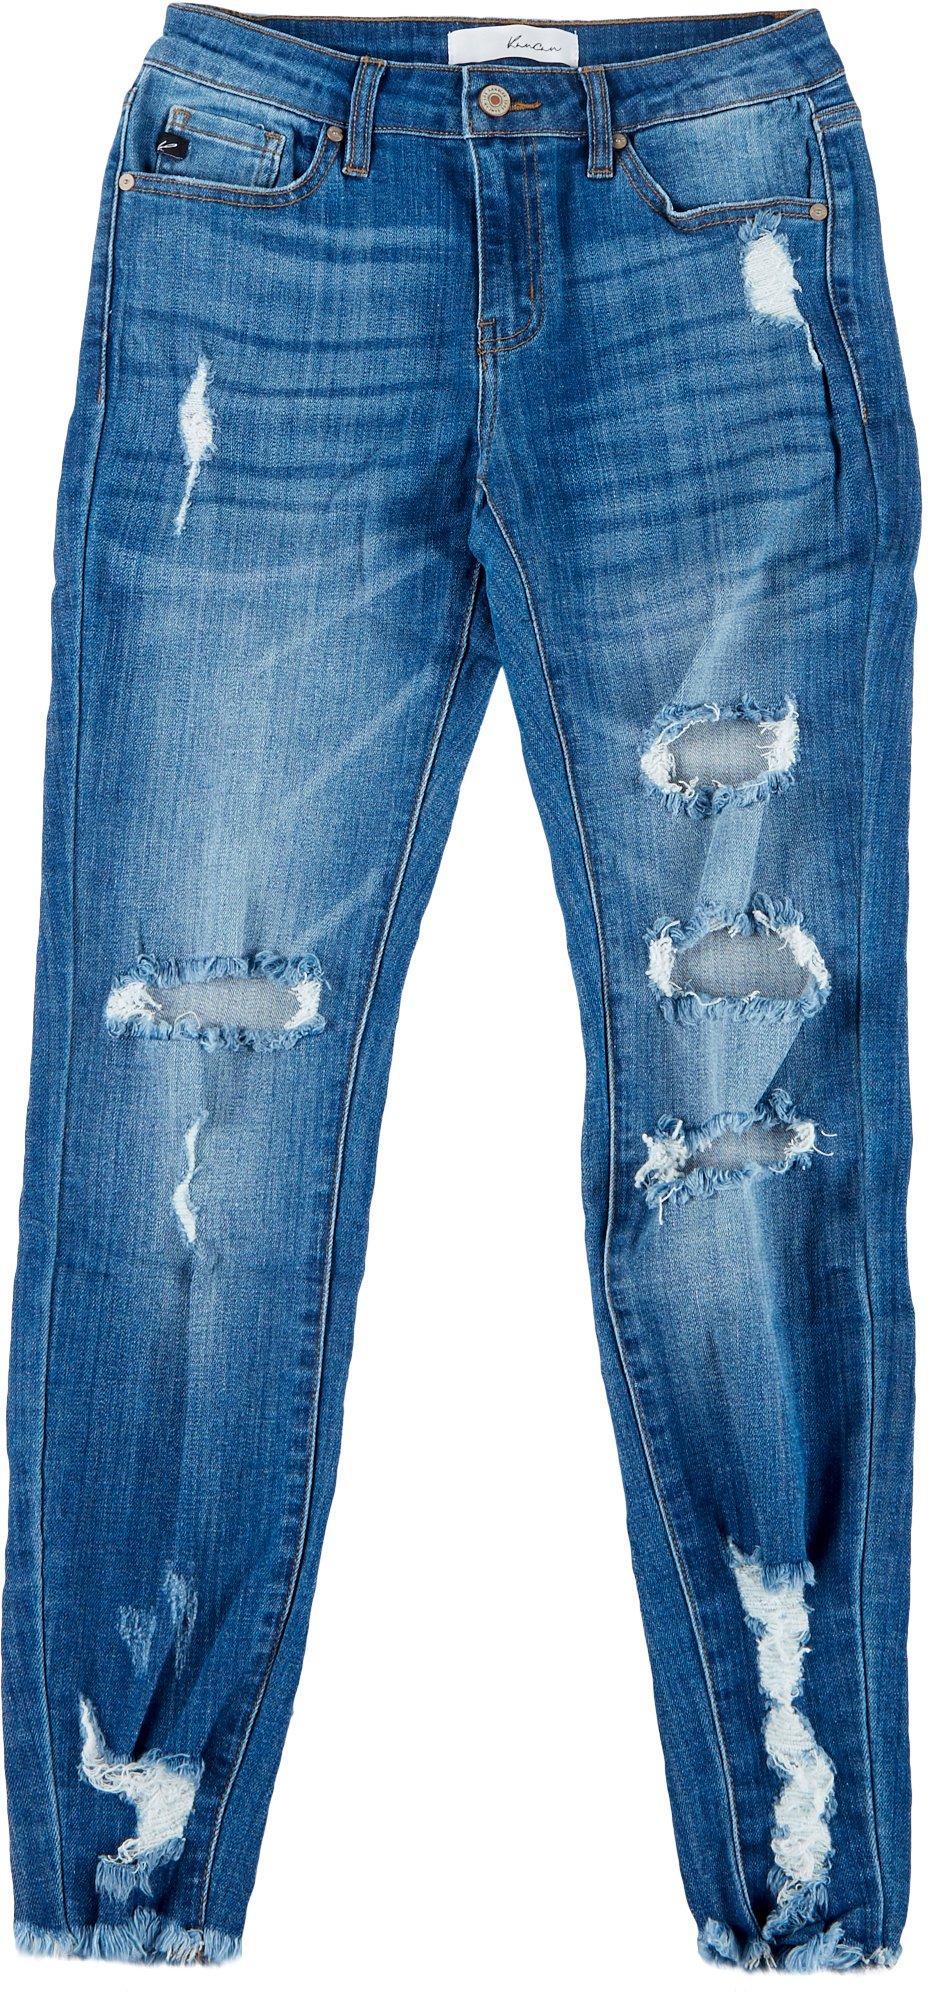 bealls jeans